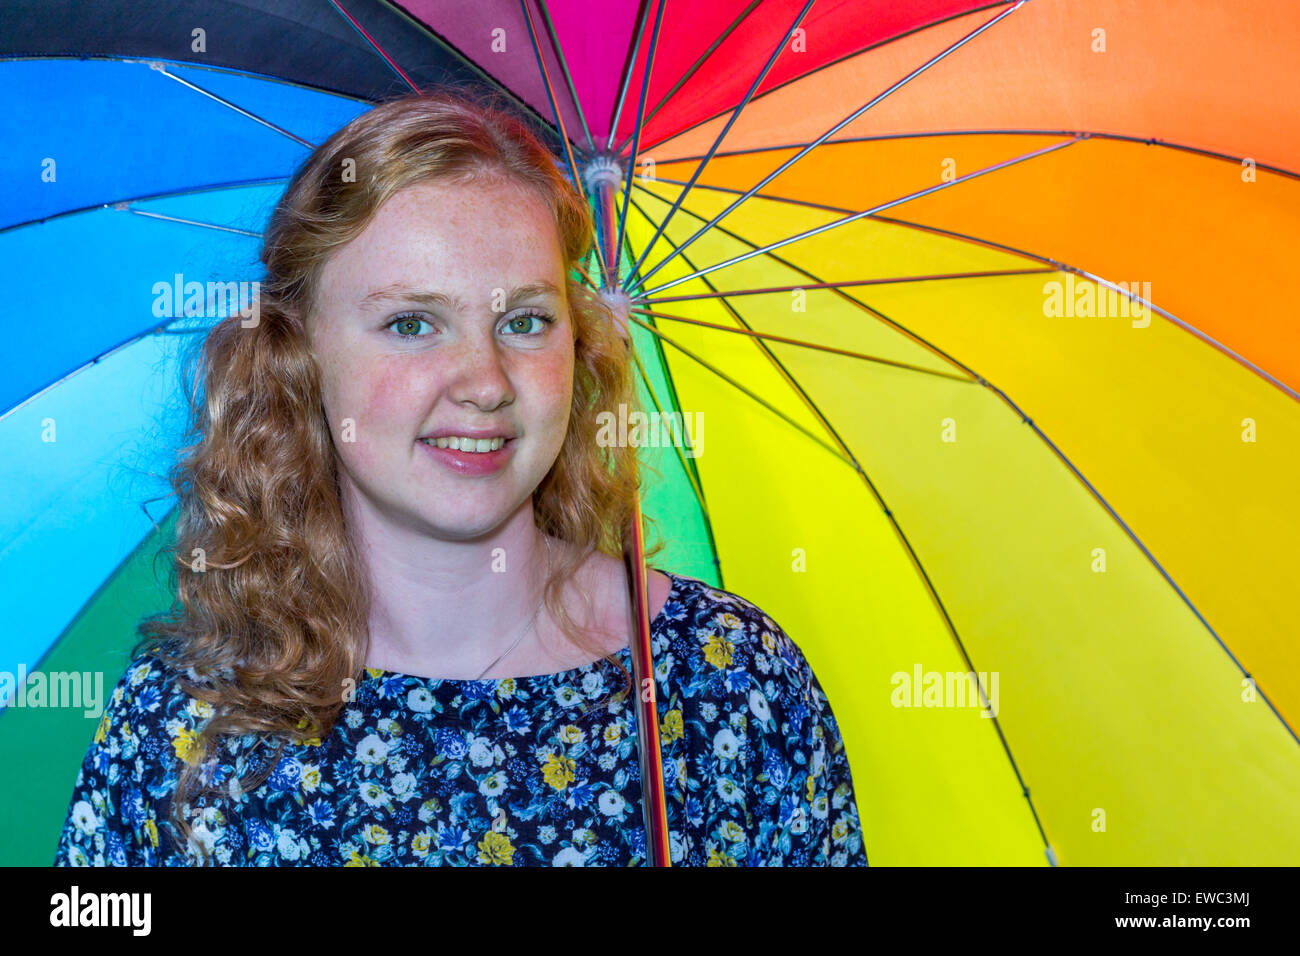 European teenage girl under colored umbrella Stock Photo